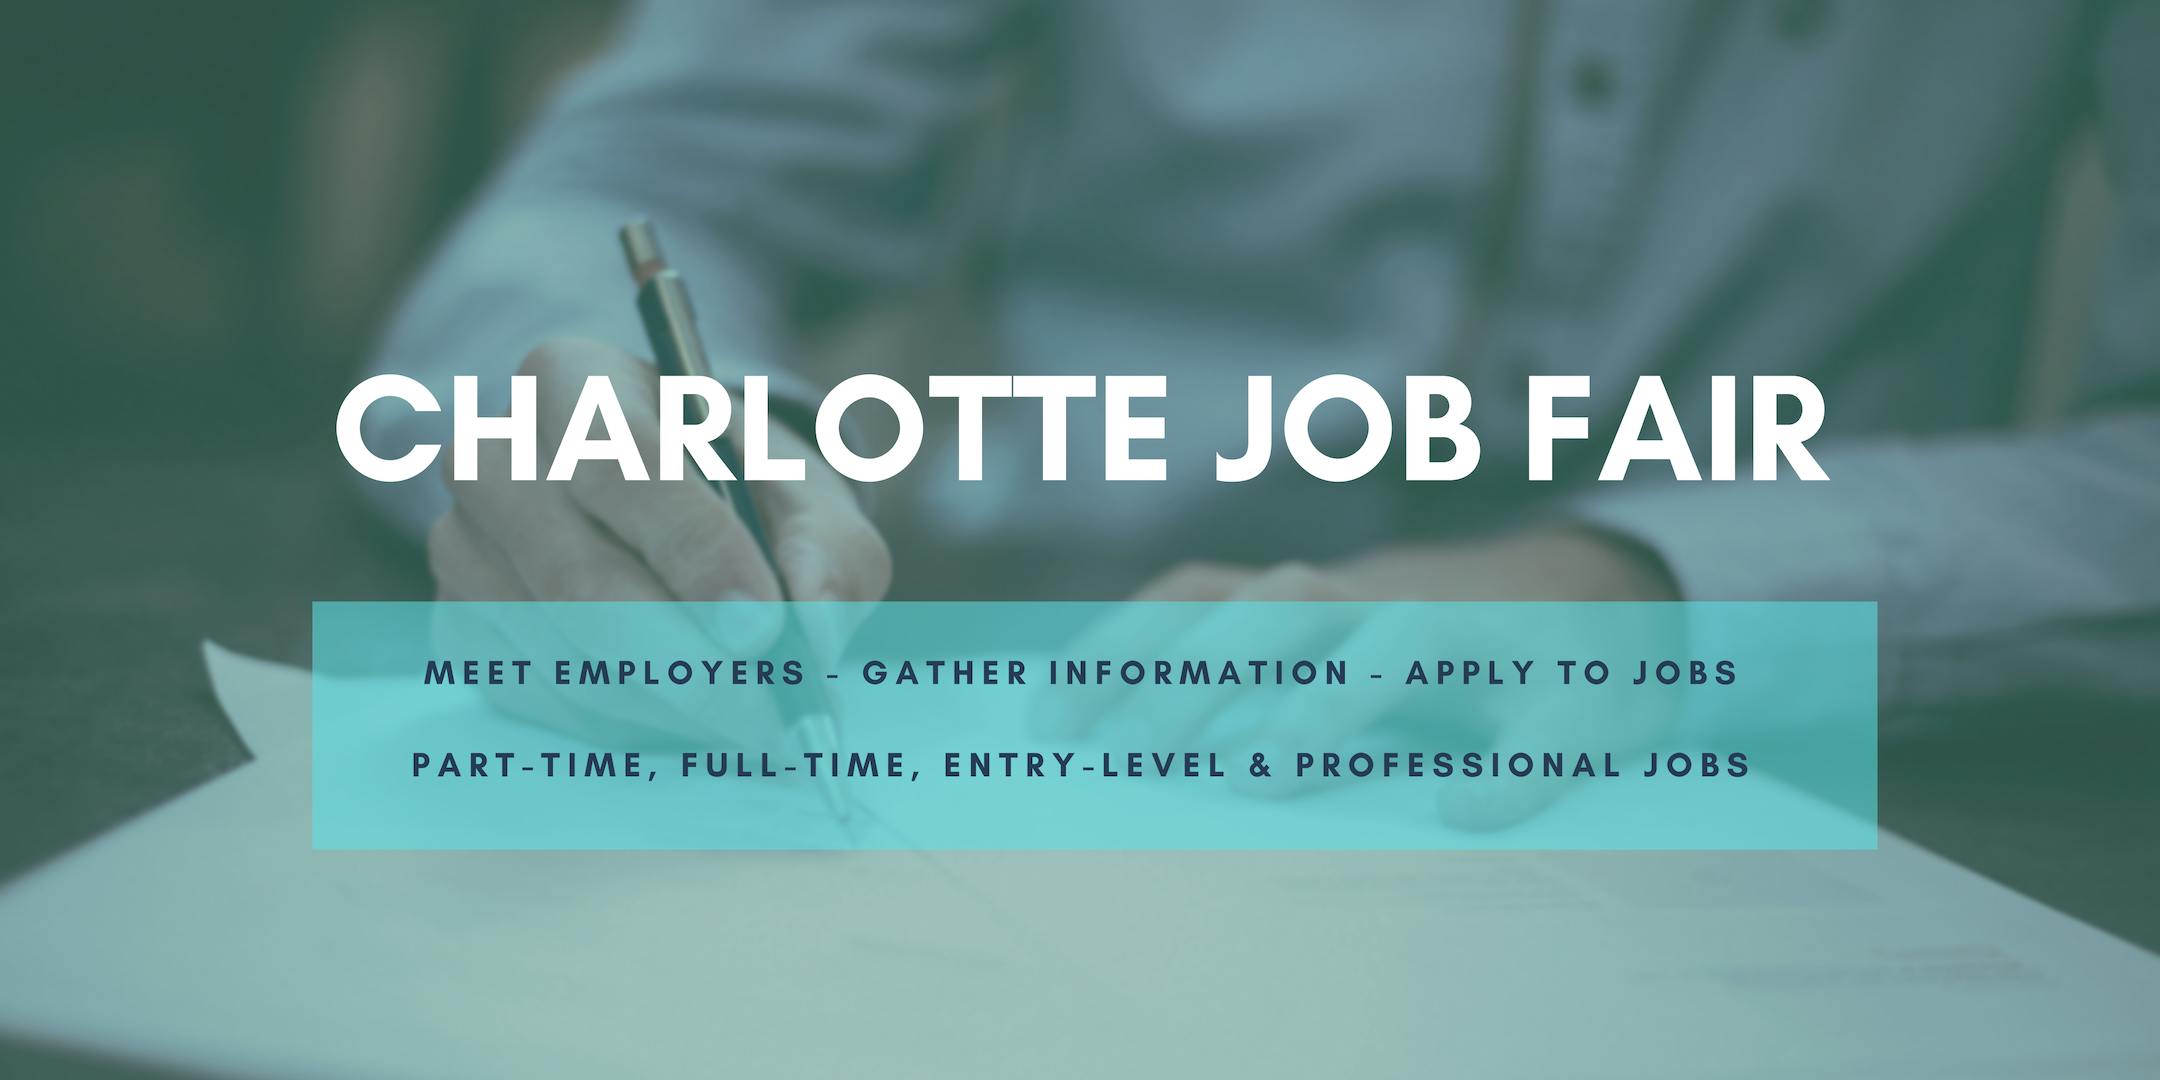 Charlotte Job Fair - January 8, 2019 Job Fairs & Hiring Events in Charlotte NC